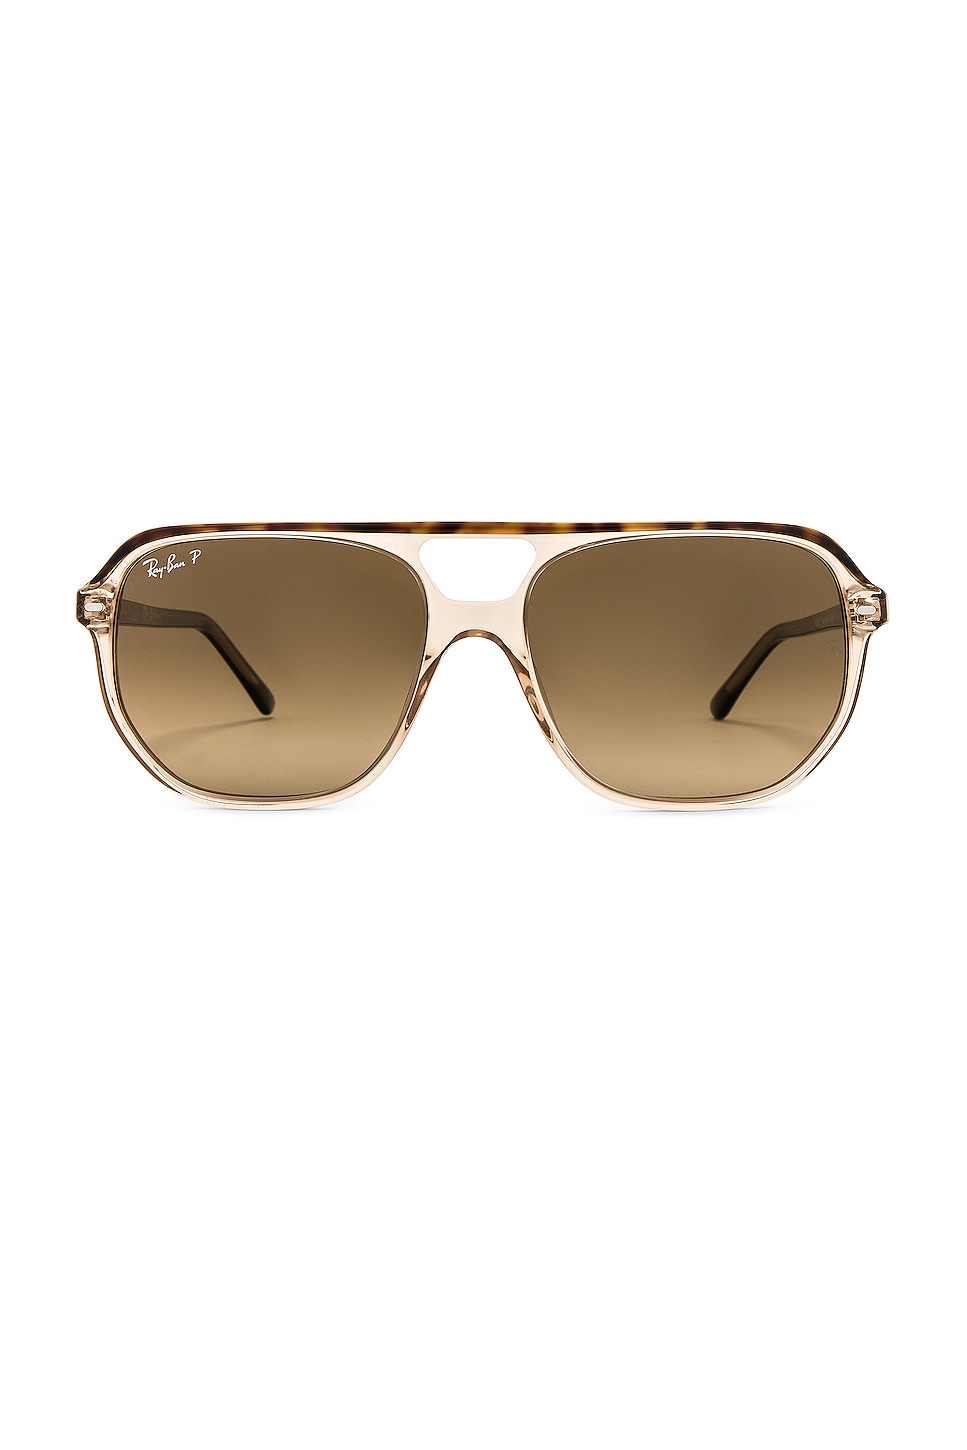 Ray-Ban Aviator Sunglasses in Havana & Transparent Brown